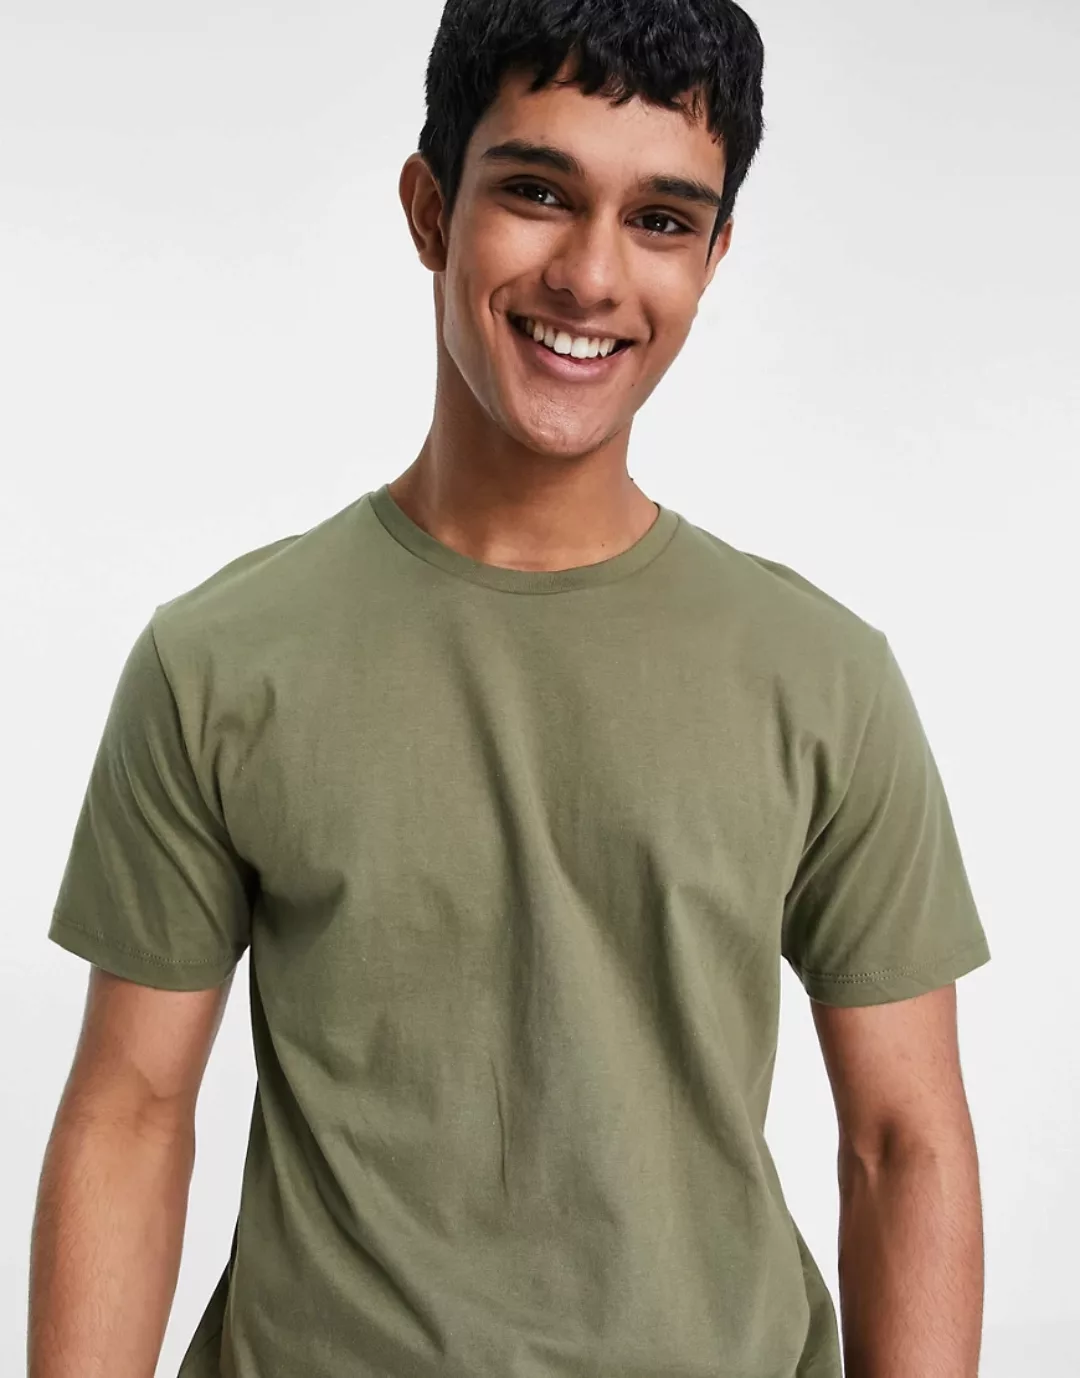 Topman – Lang geschnittenes T-Shirt in Khaki-Grün günstig online kaufen